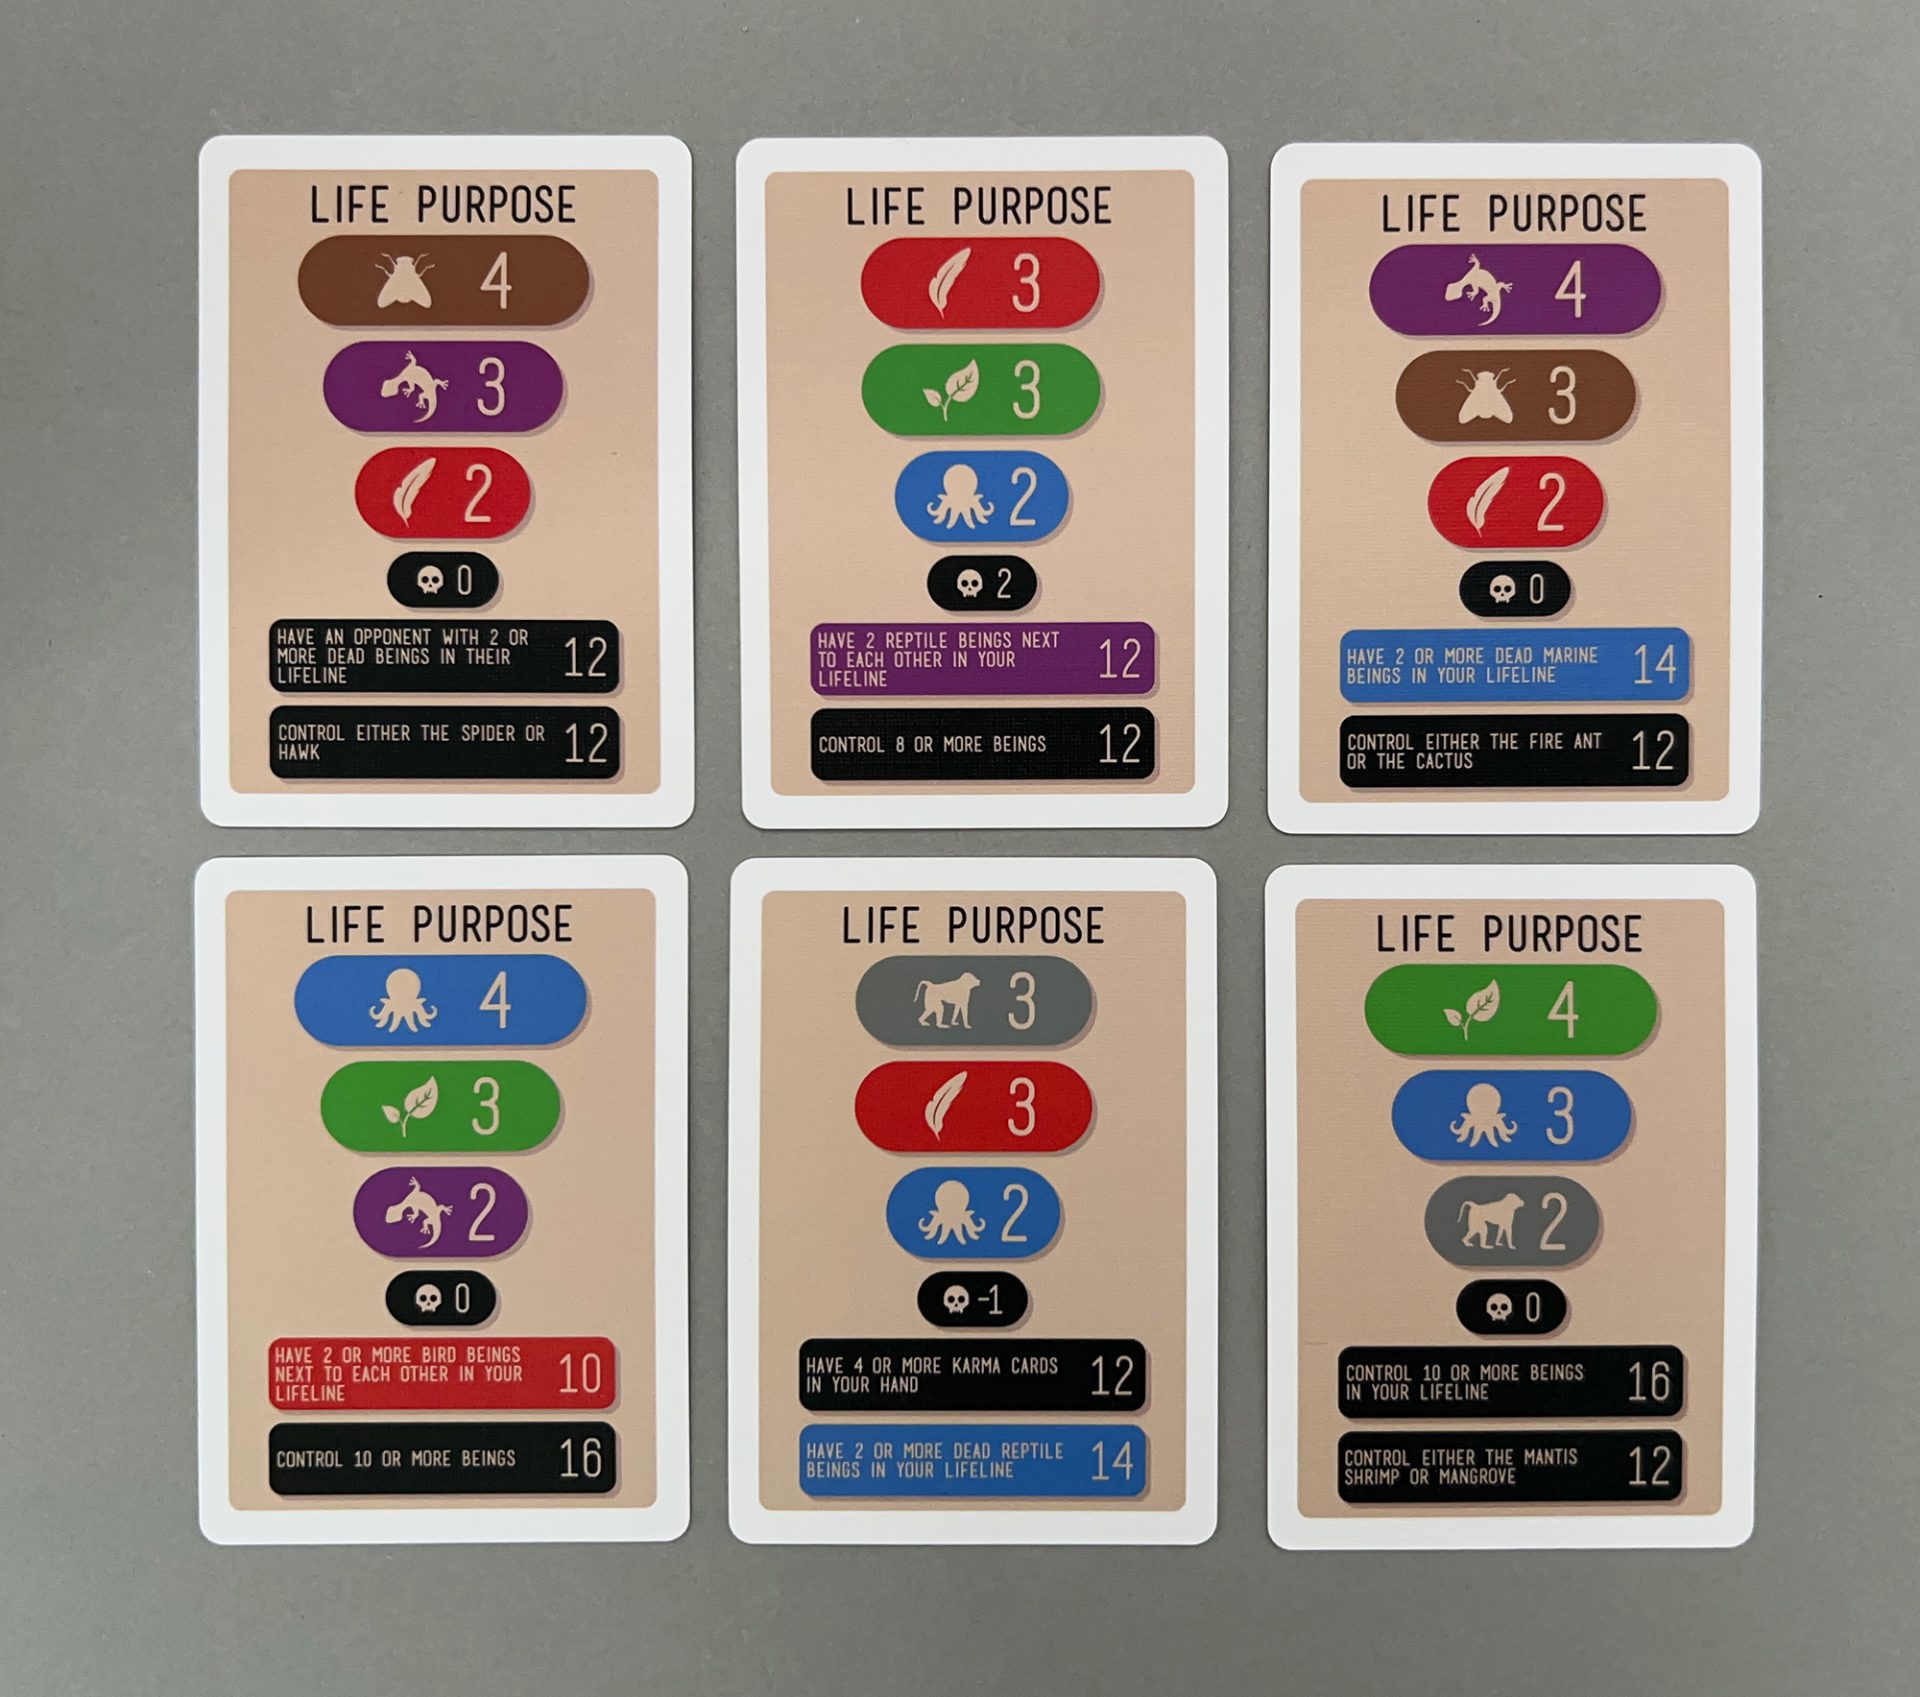 Life Purpose cards.